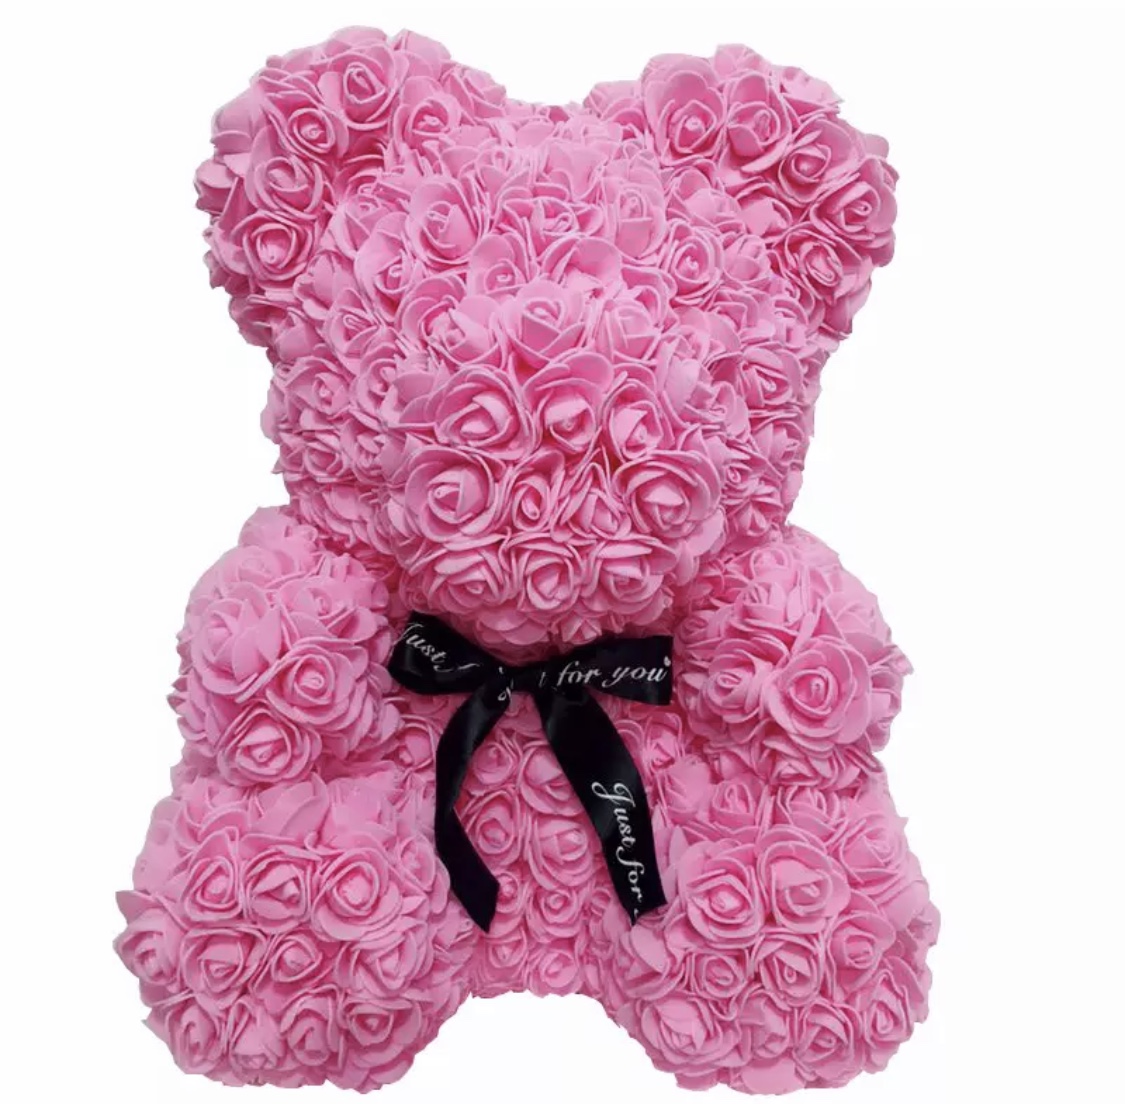 Medvedek iz vrtnic - roza 40 cm